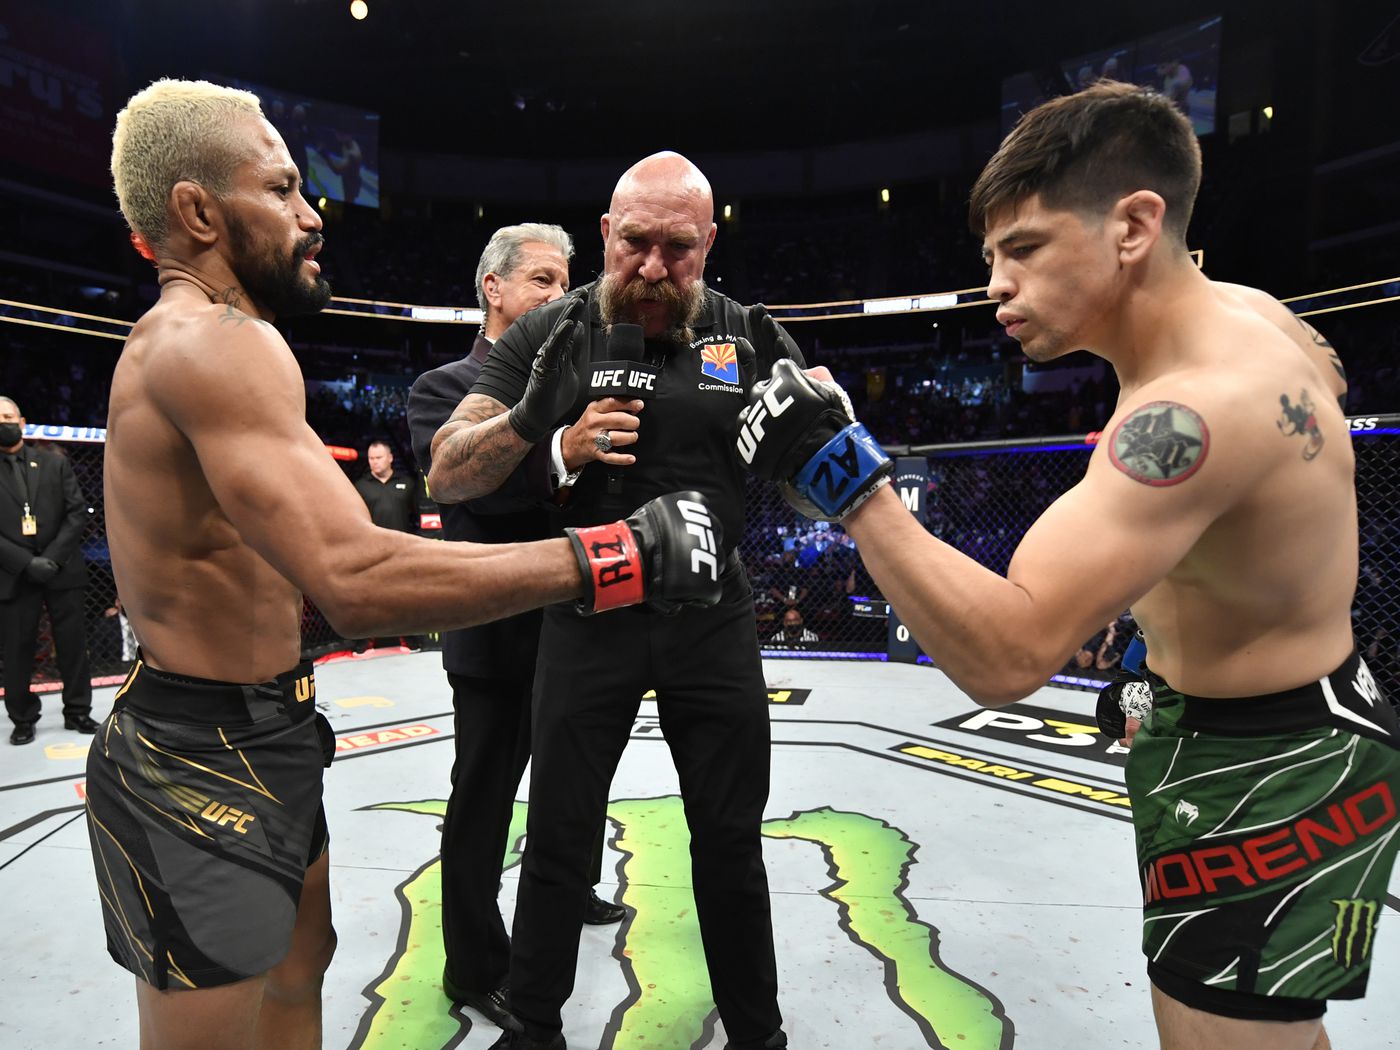 Brandon Moreno vs. Deiveson Figueiredo 3 official for UFC 270 in January